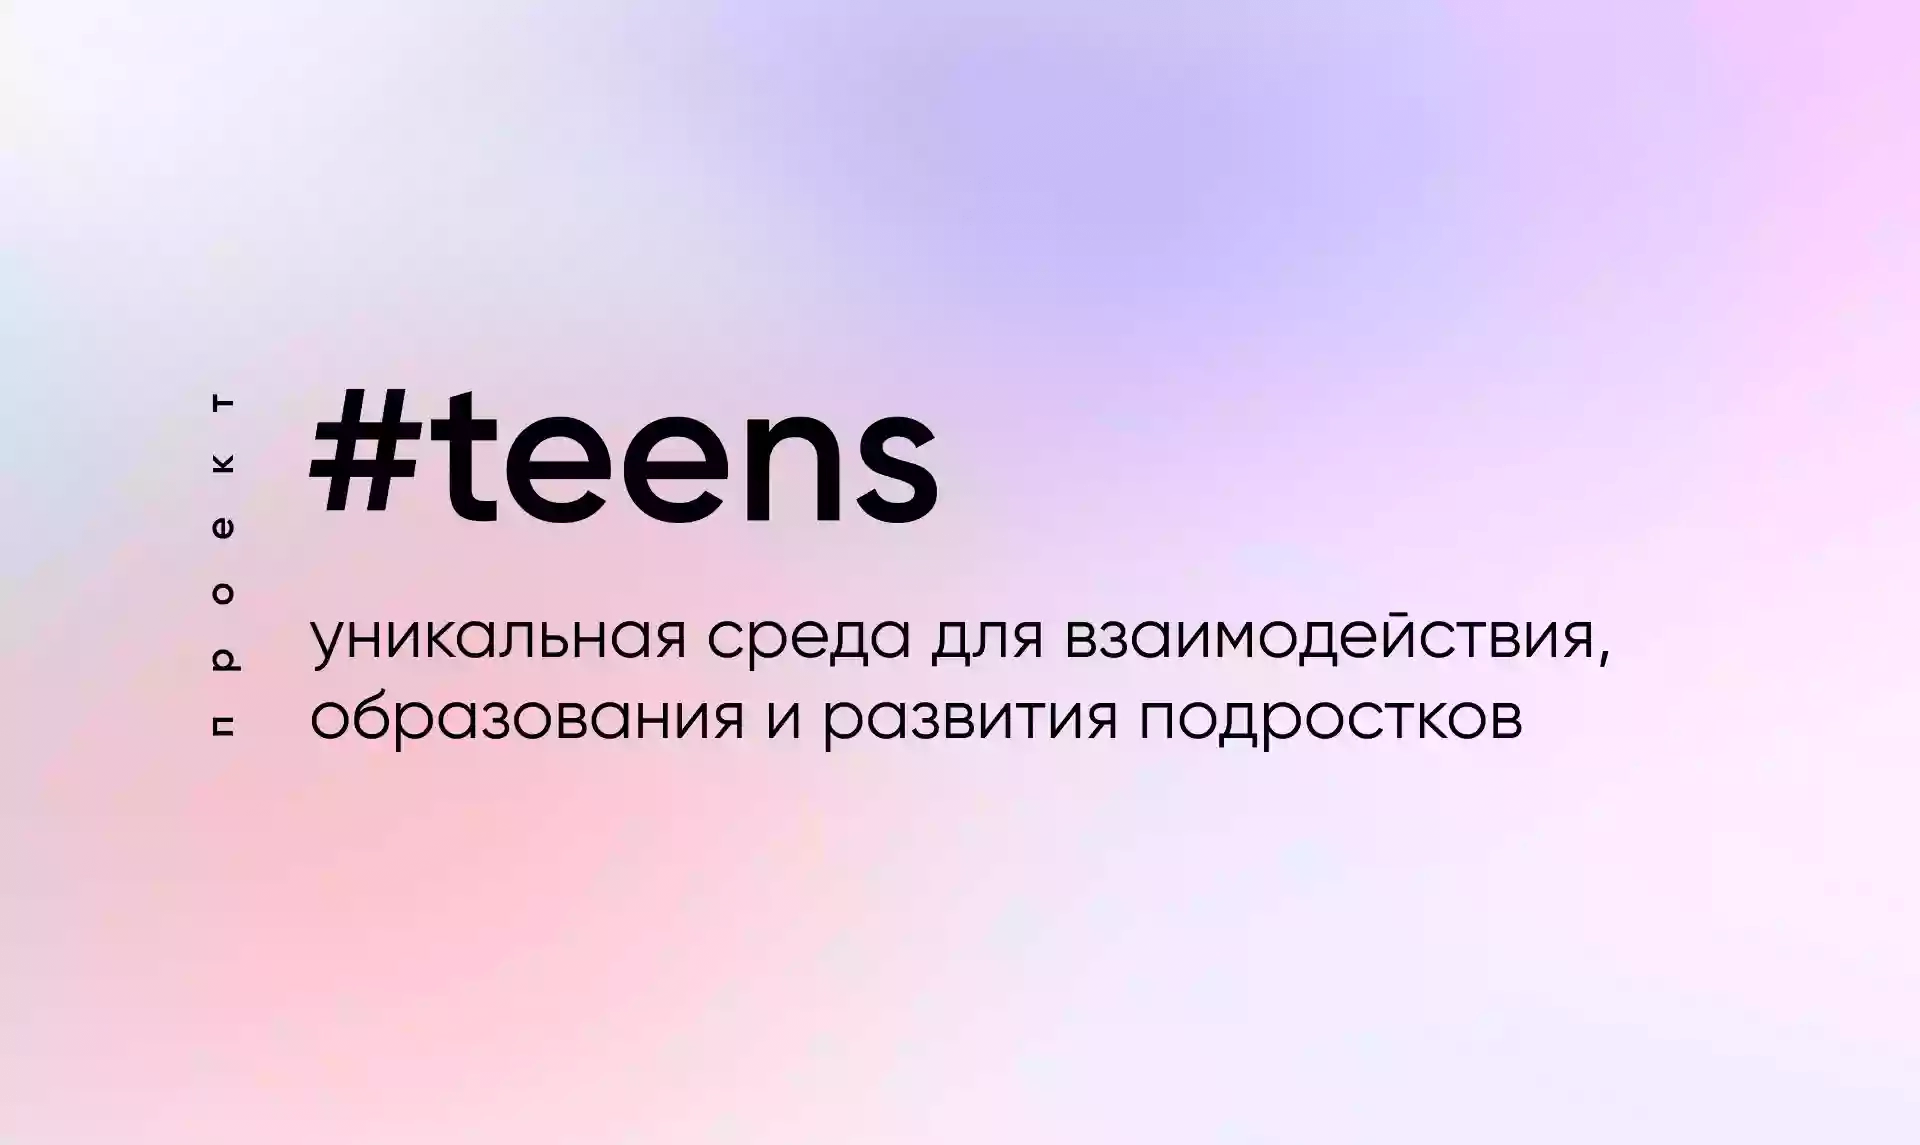 Teens academy